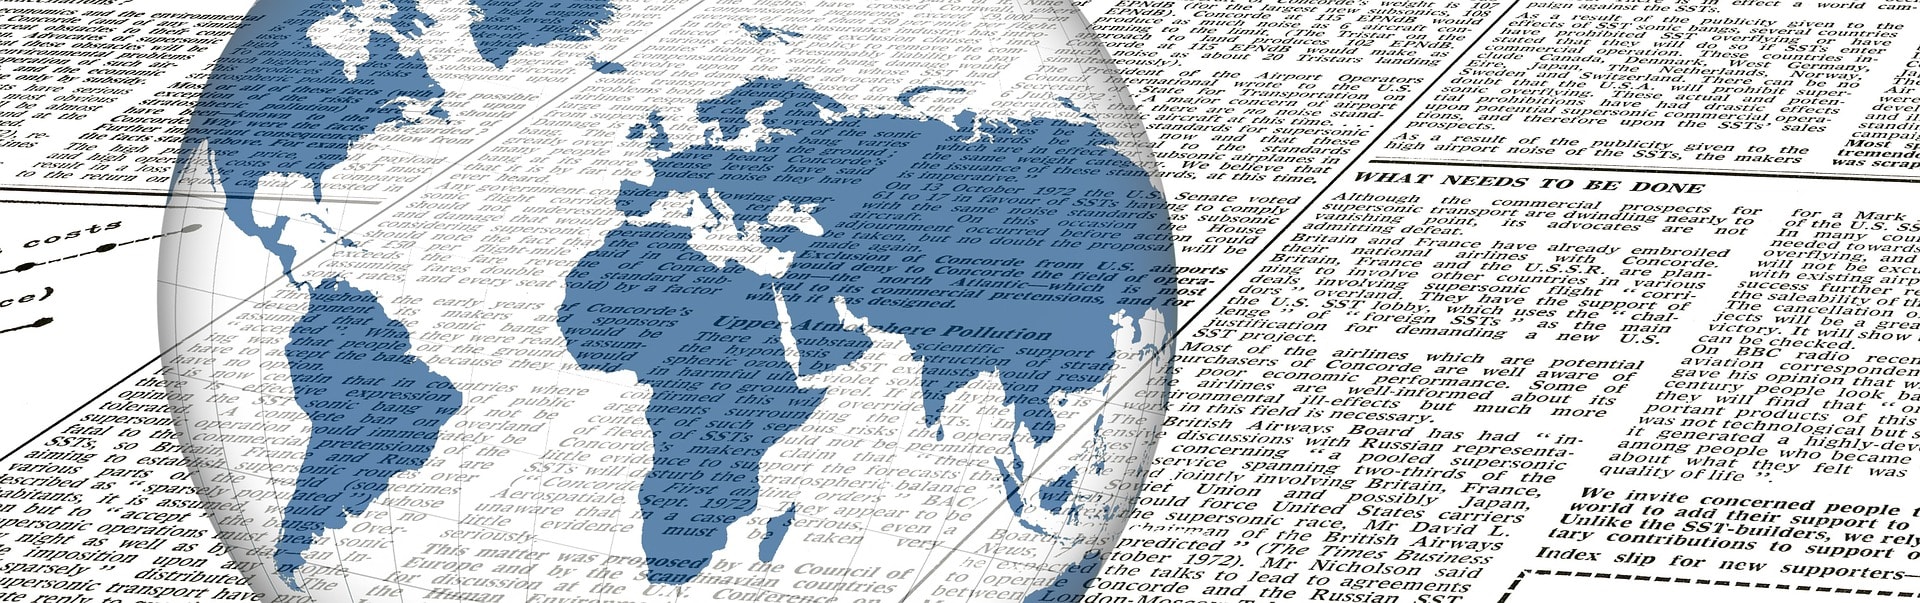 A globe super-imposed onto a newspaper